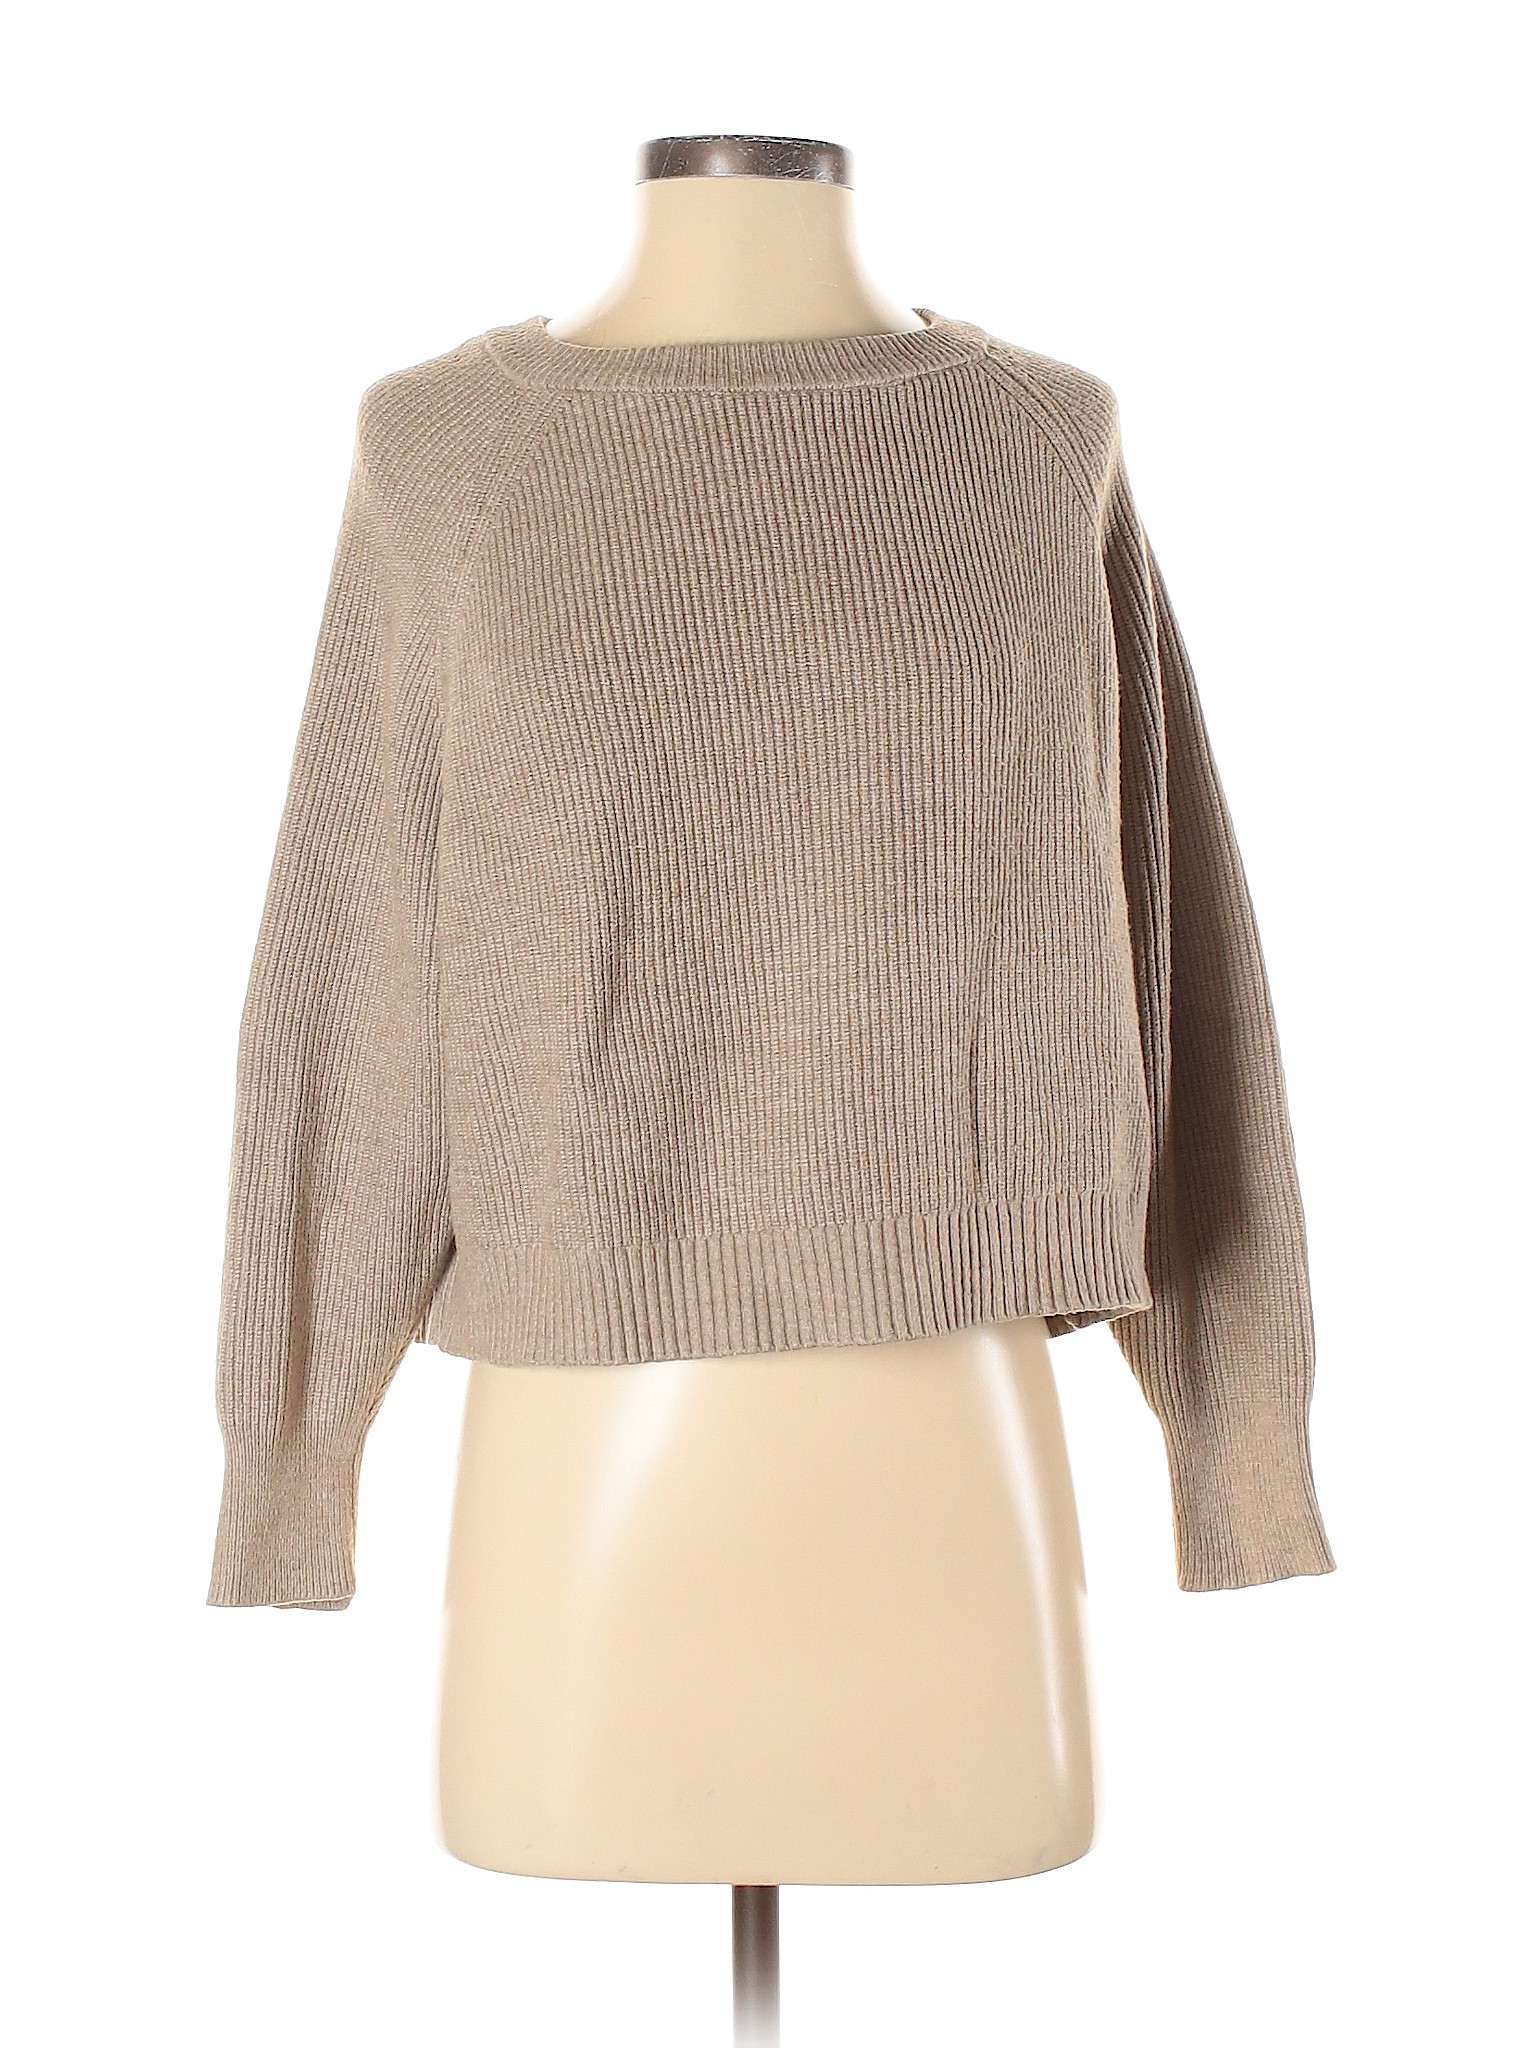 Zara Women Brown Pullover Sweater S | eBay